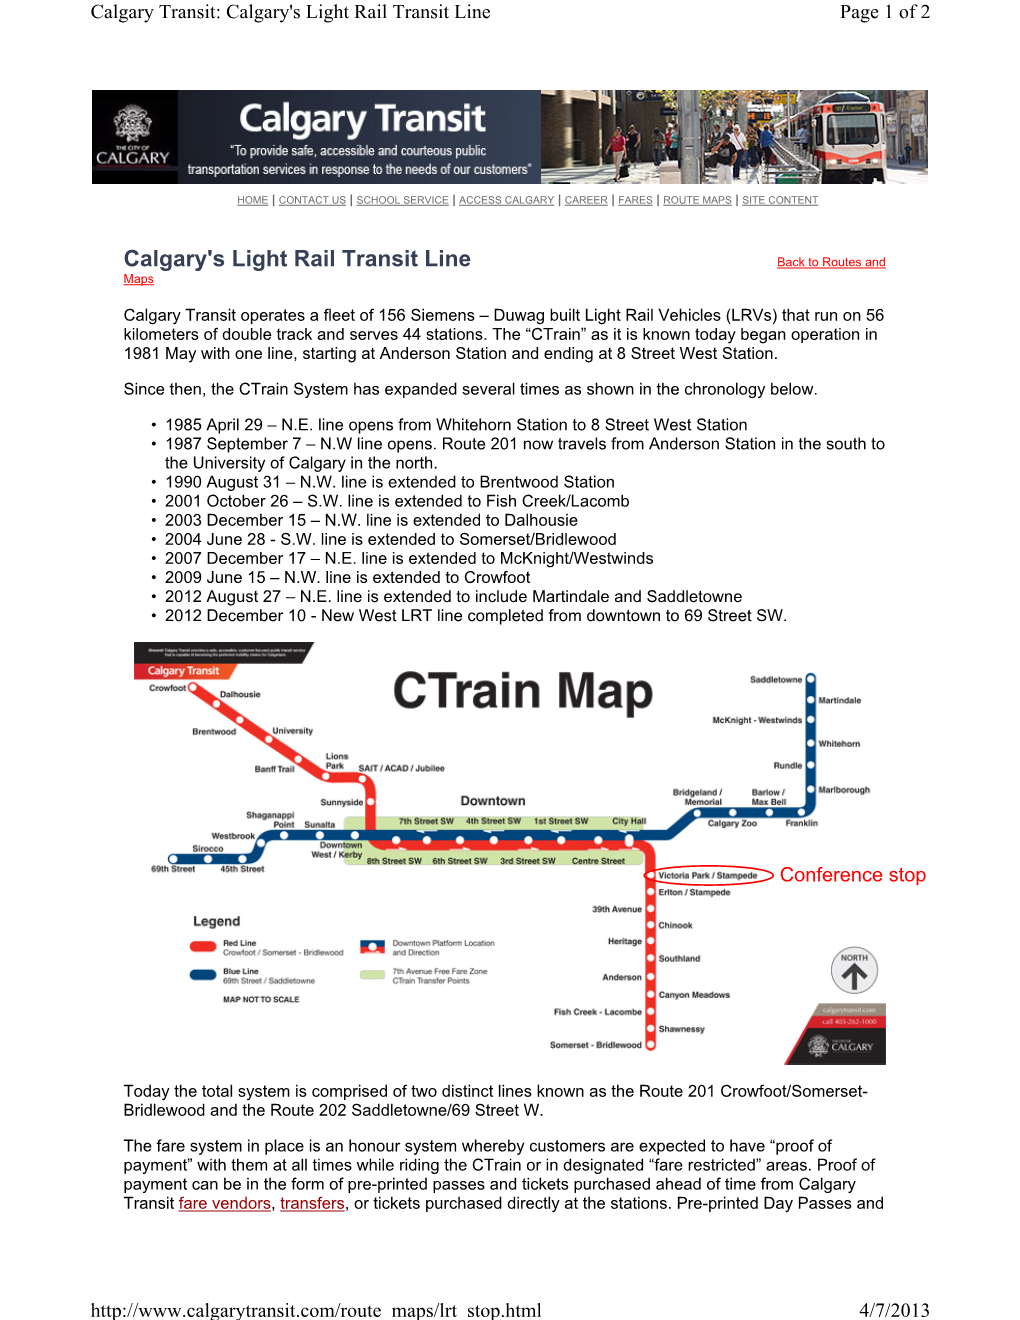 Calgary's Light Rail Transit Line Page 1 of 2